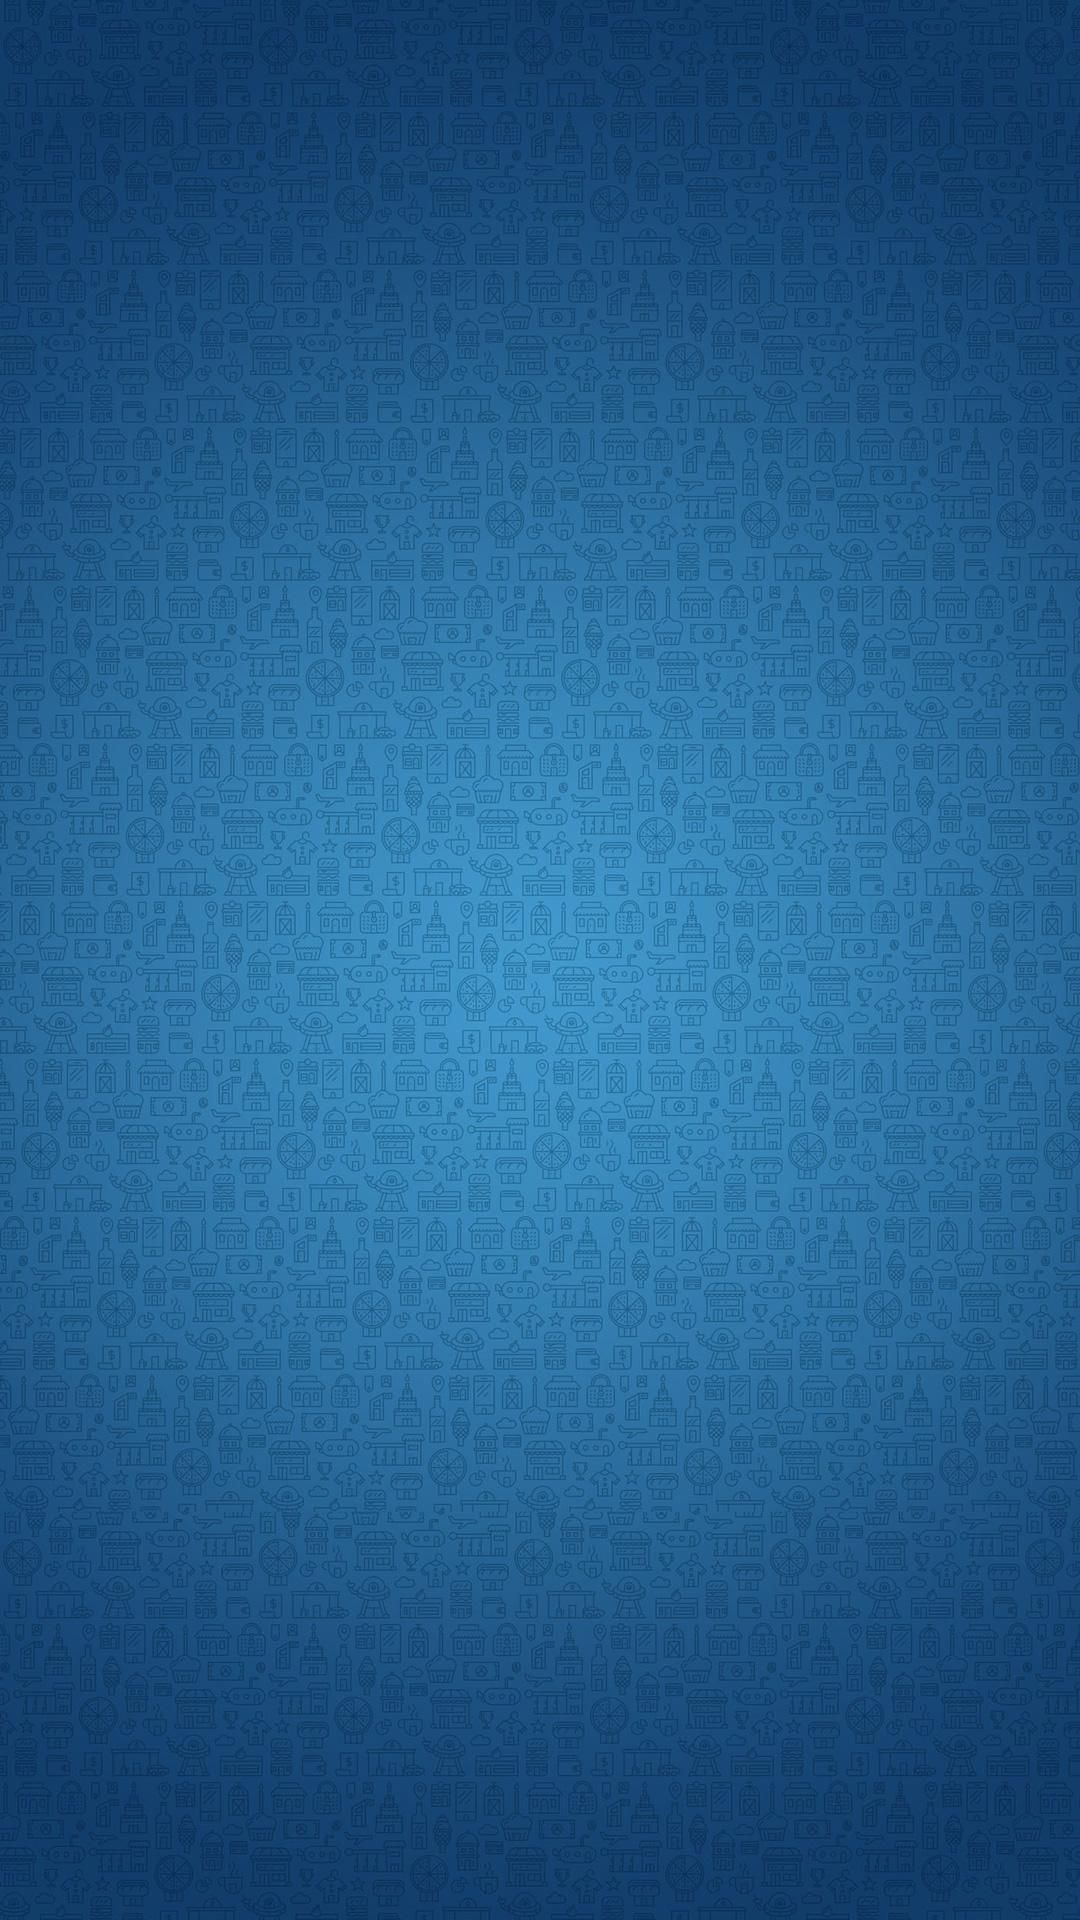 Dark Blue iPhone Wallpaper